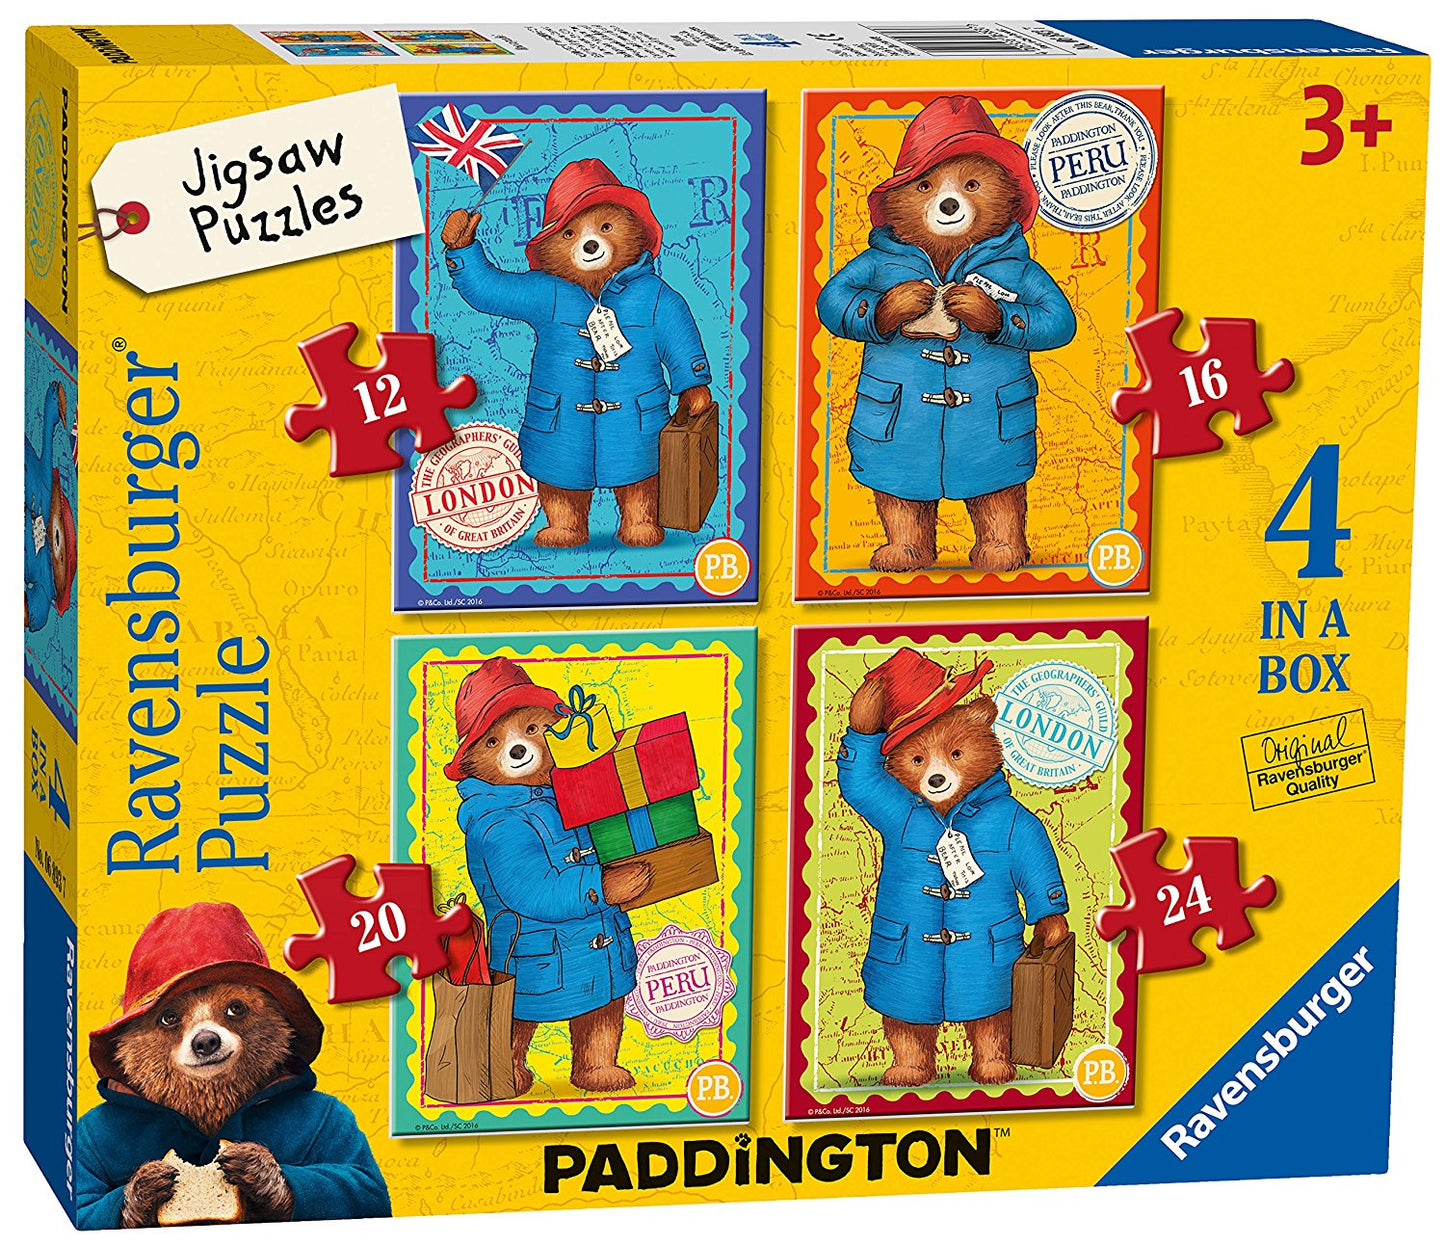 Ravensburger Paddington Bear 4 in a box (12, 16, 20, 24pc) Jigsaw Puzzles